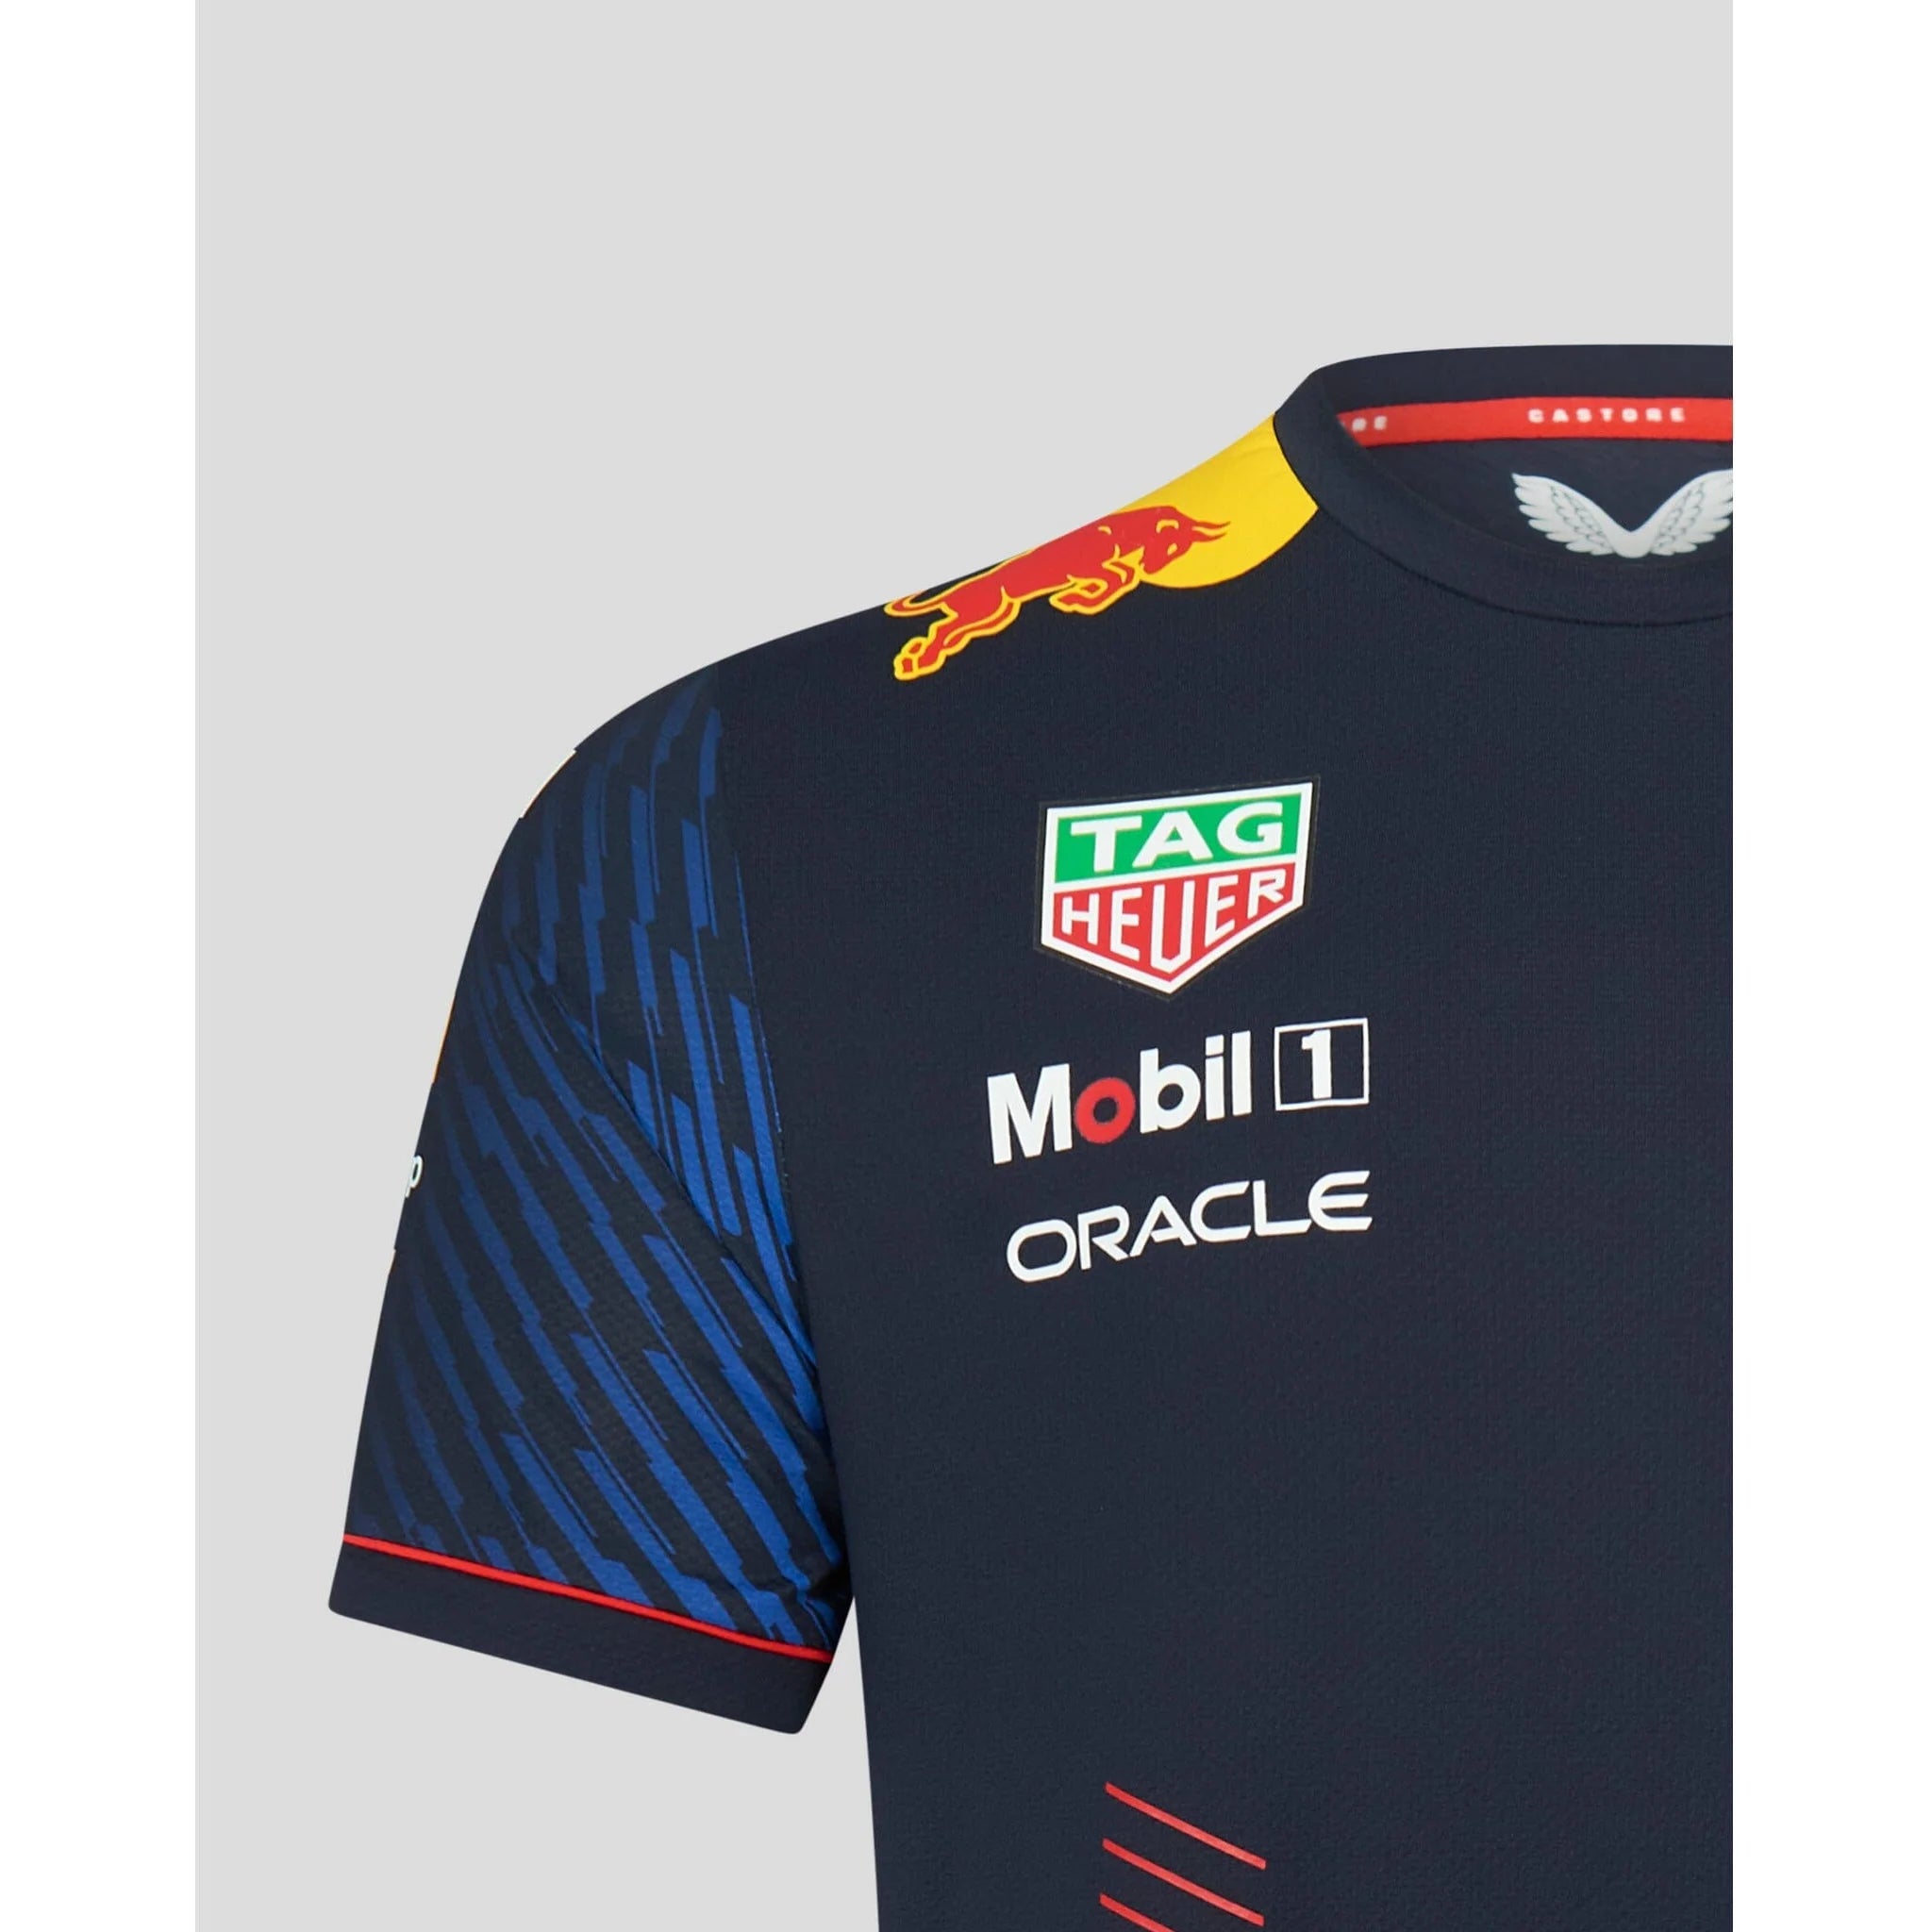 Red Bull Racing F1 Men's 2023 Team T-Shirt Navy